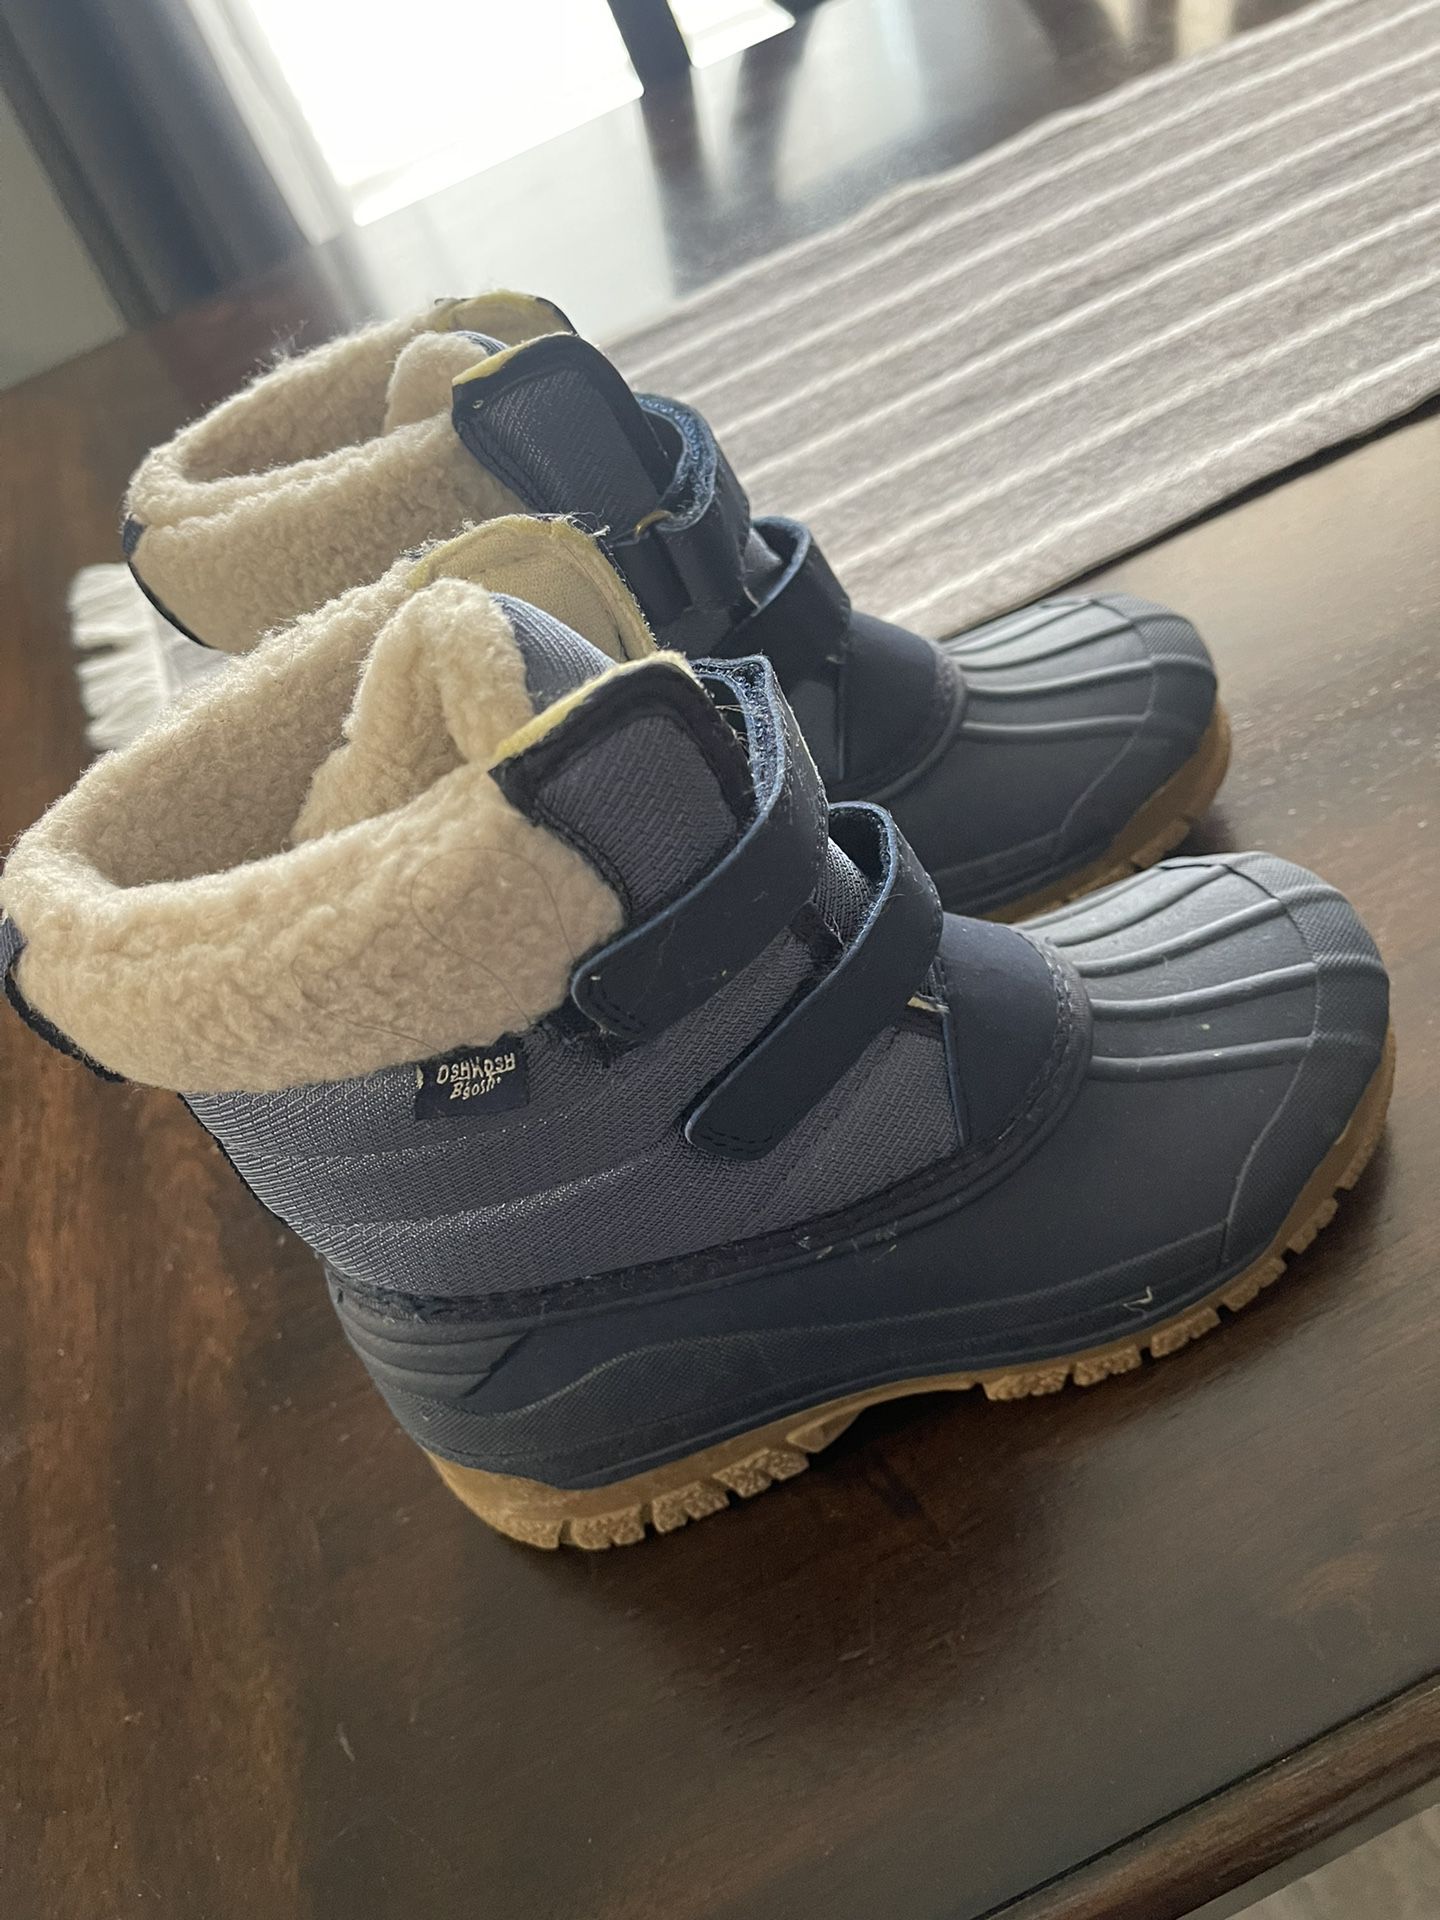 Oshkosh Snow Boots